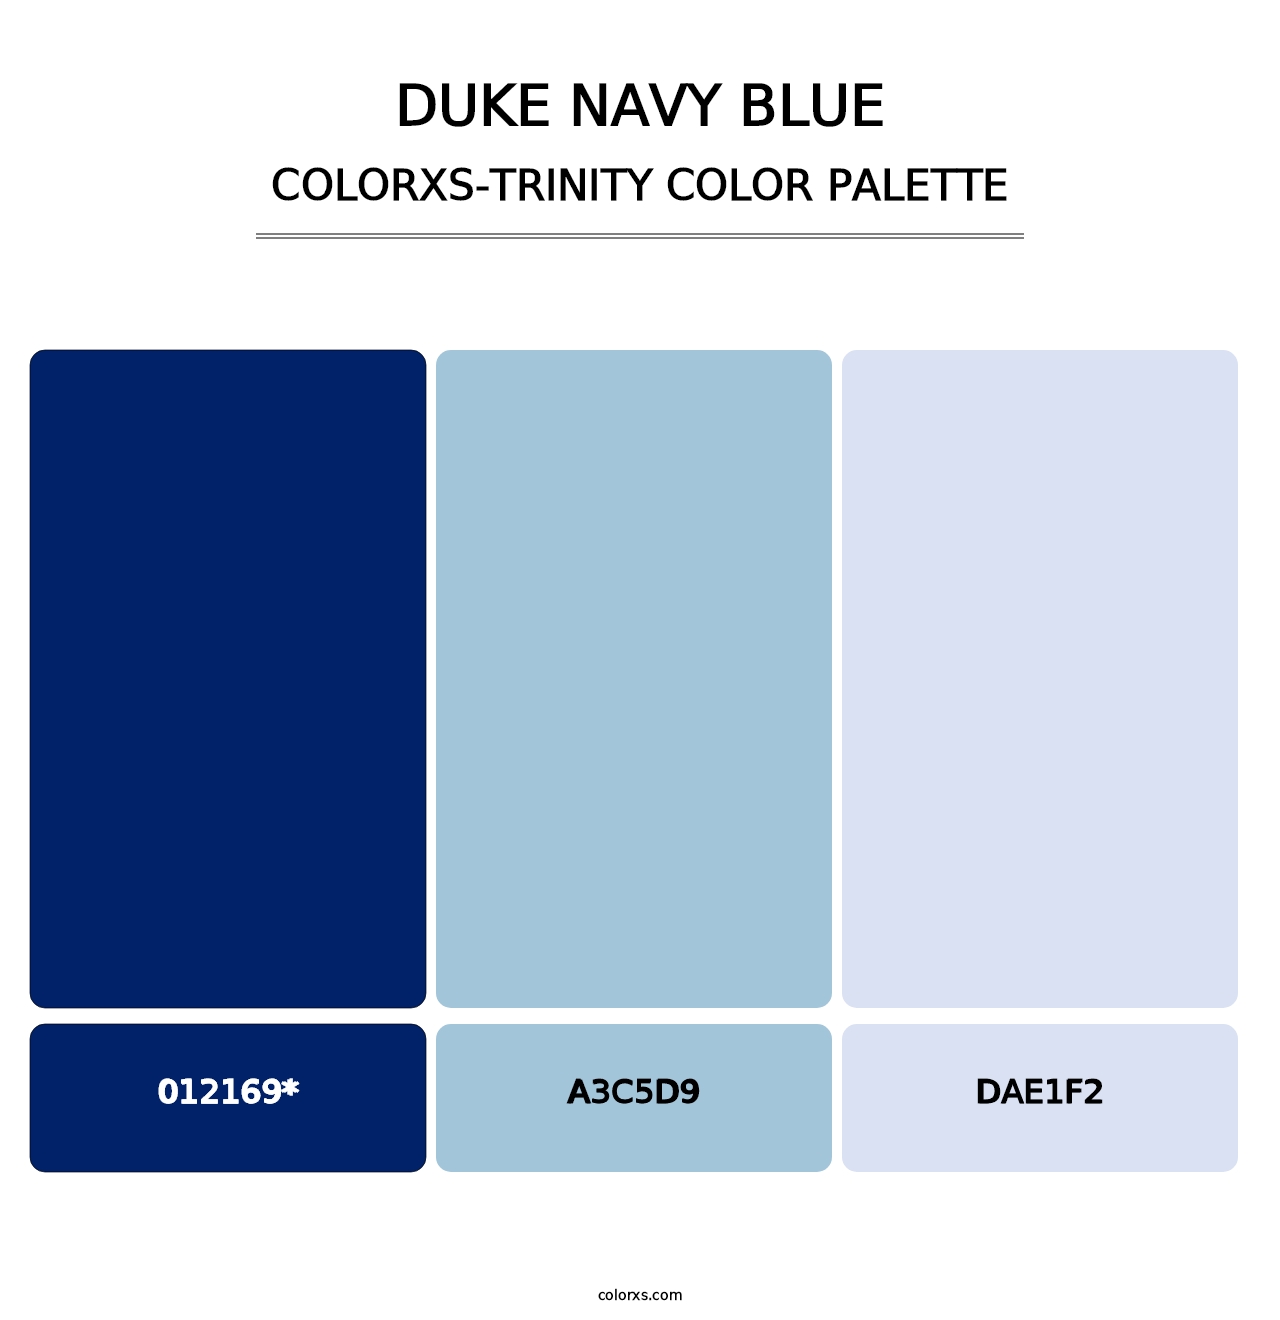 Duke Navy Blue - Colorxs Trinity Palette